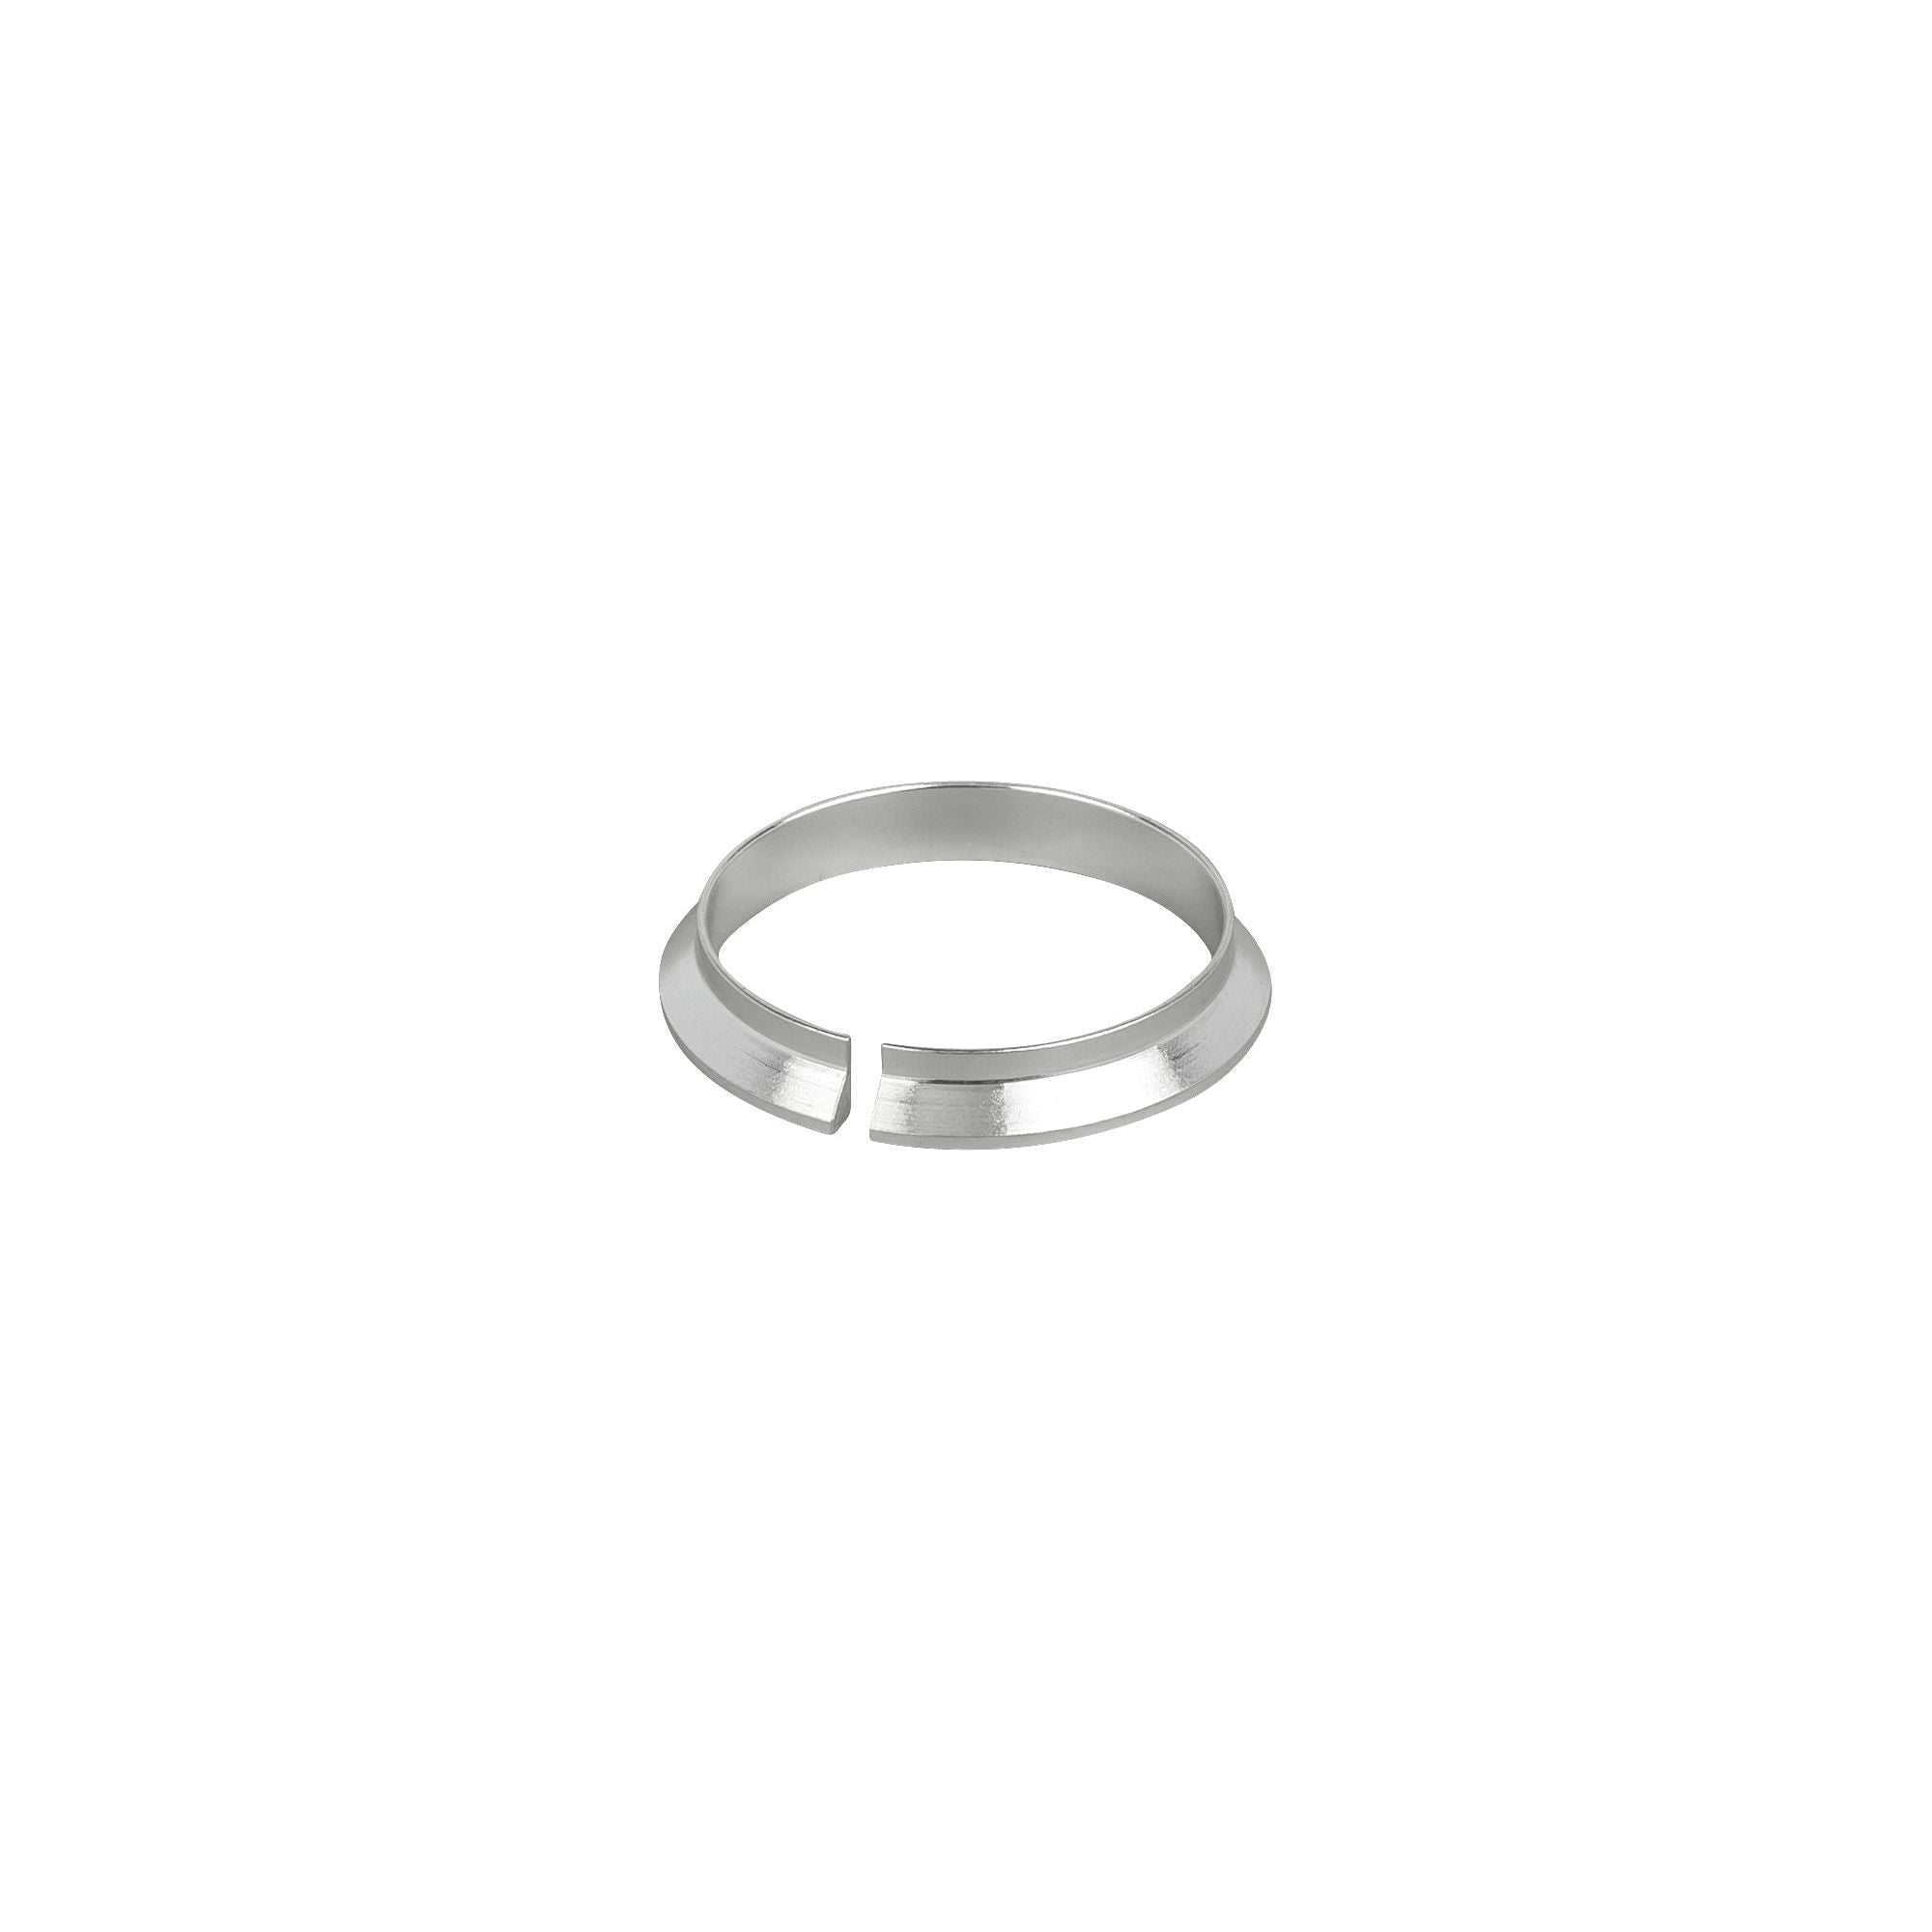 Trek Marlin Headset Compression Ring